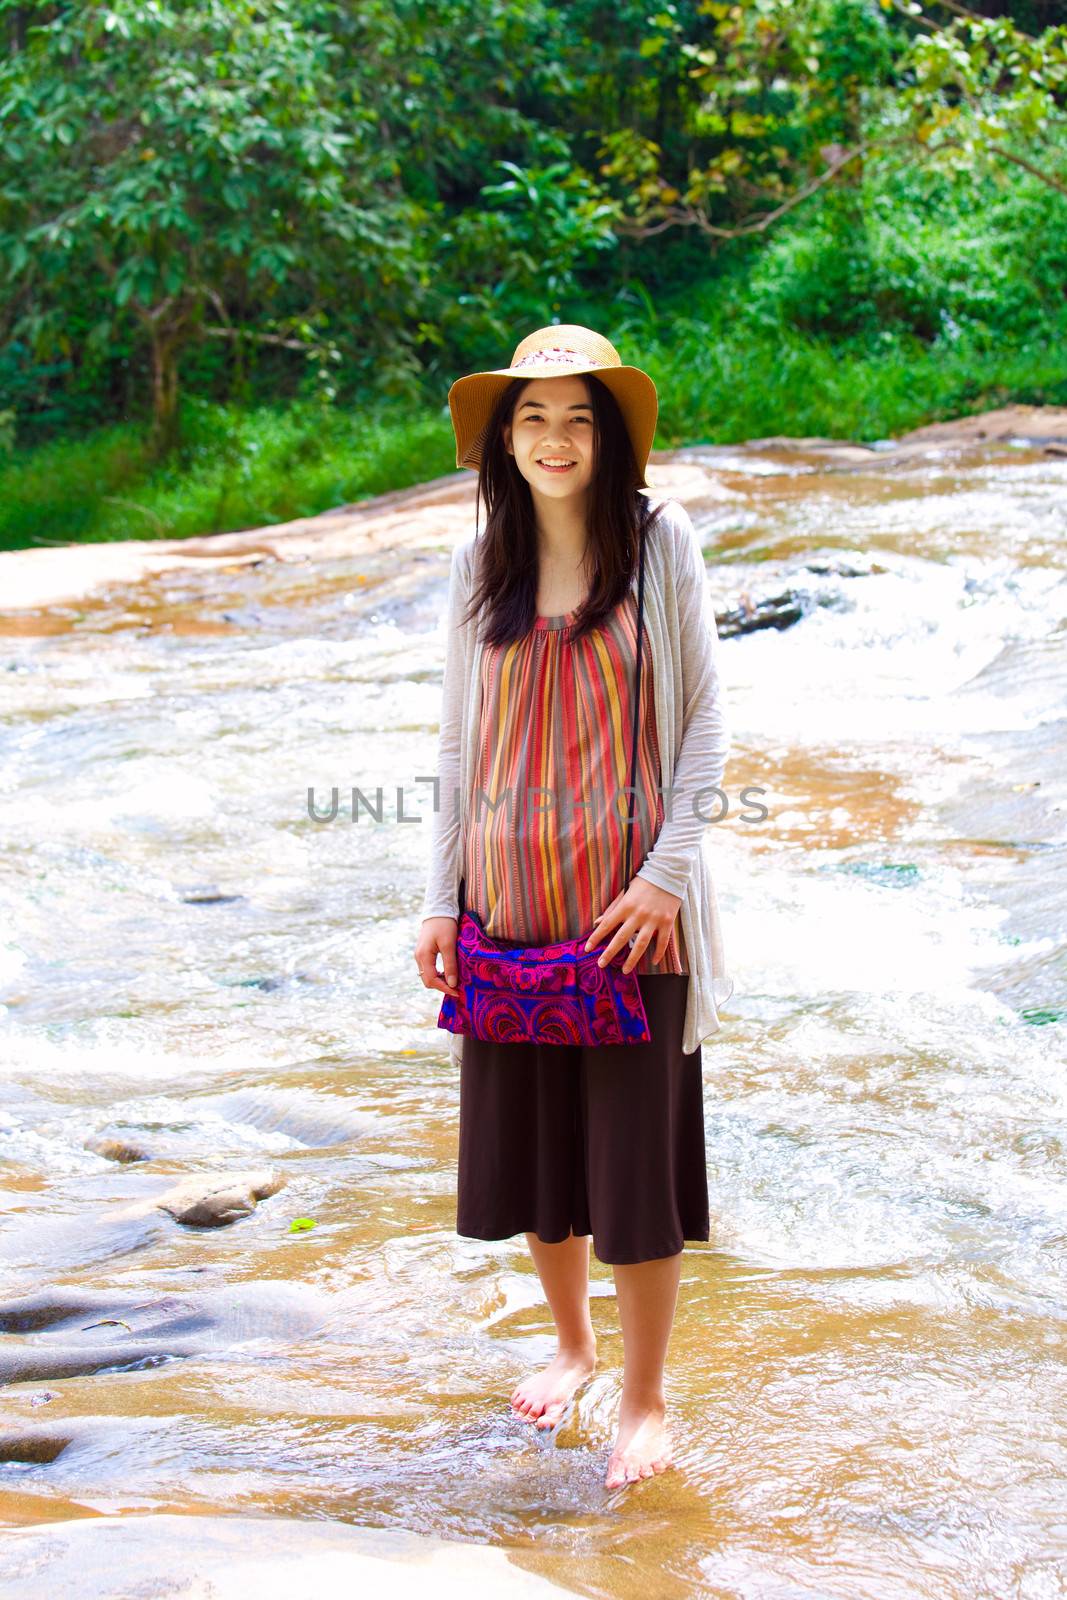 Biracial teen girl standing in shallow water, smiling